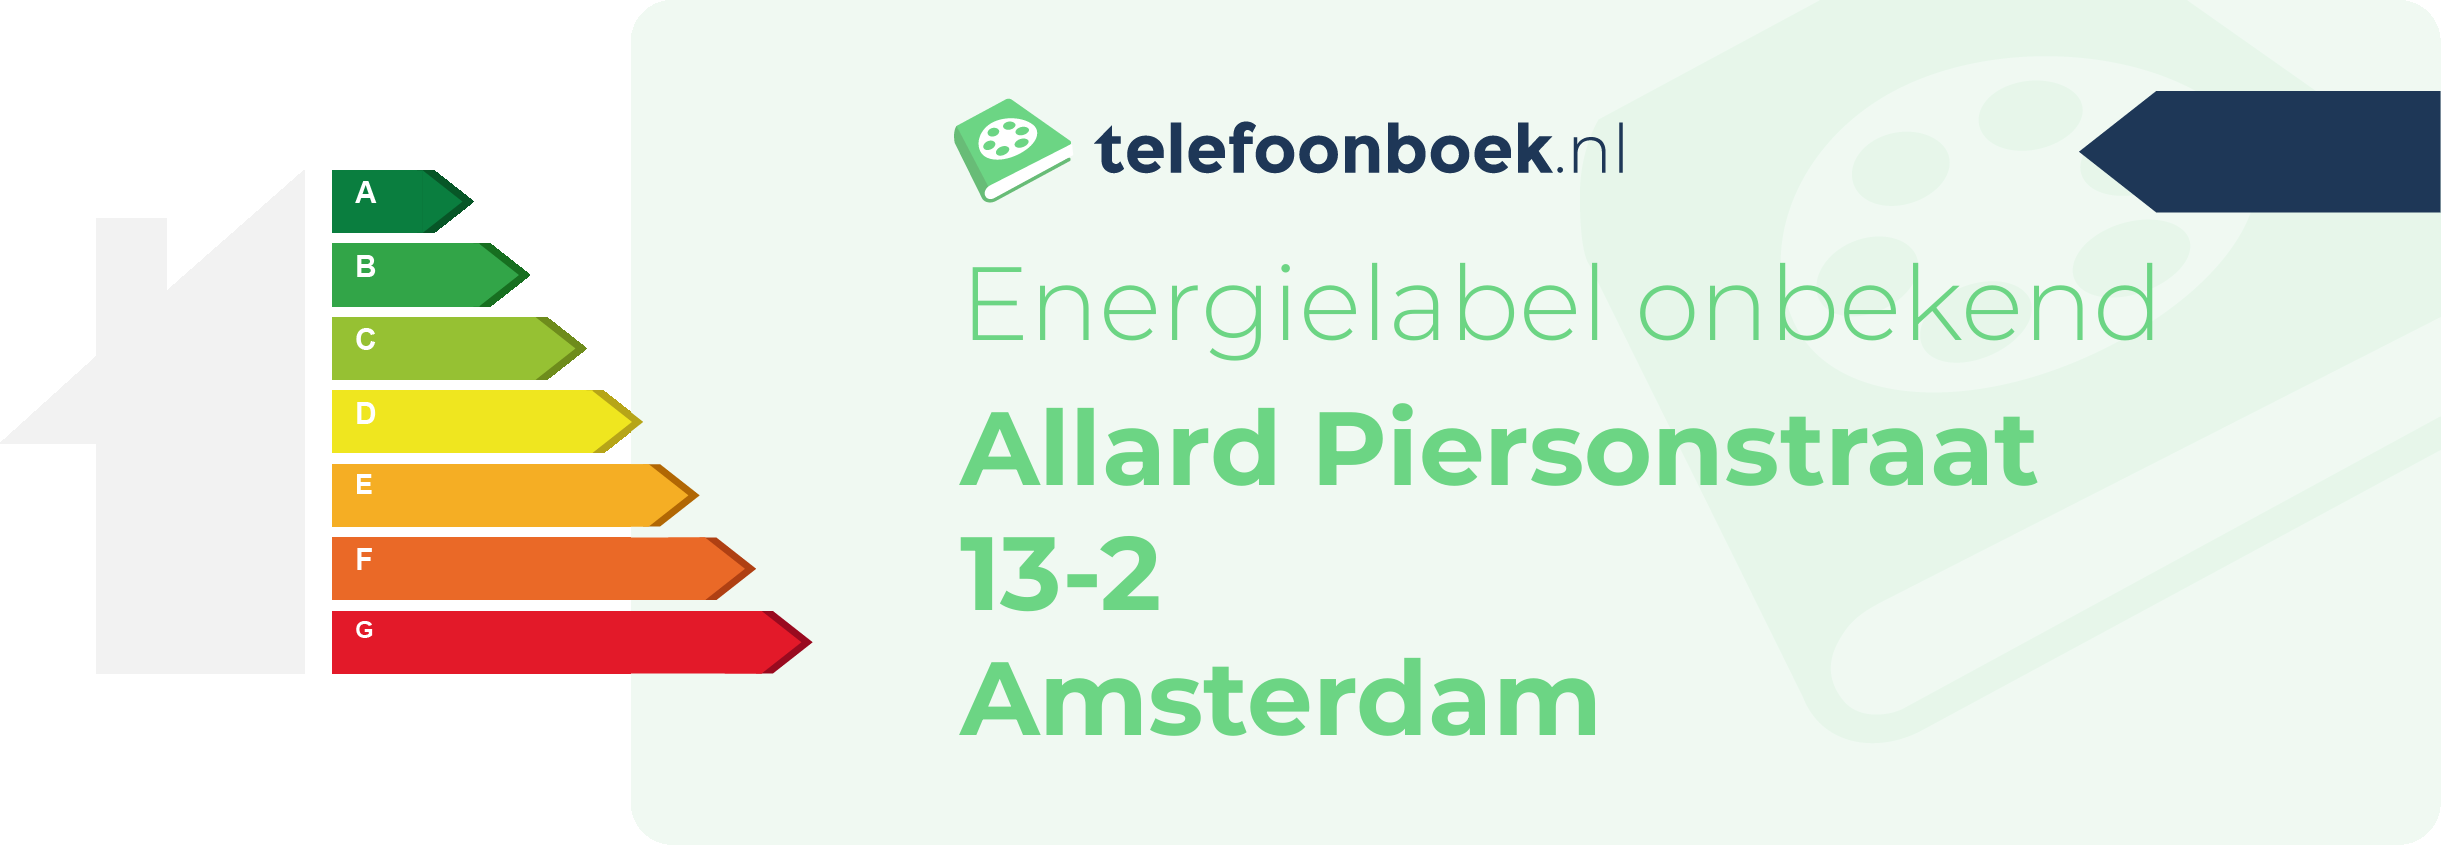 Energielabel Allard Piersonstraat 13-2 Amsterdam